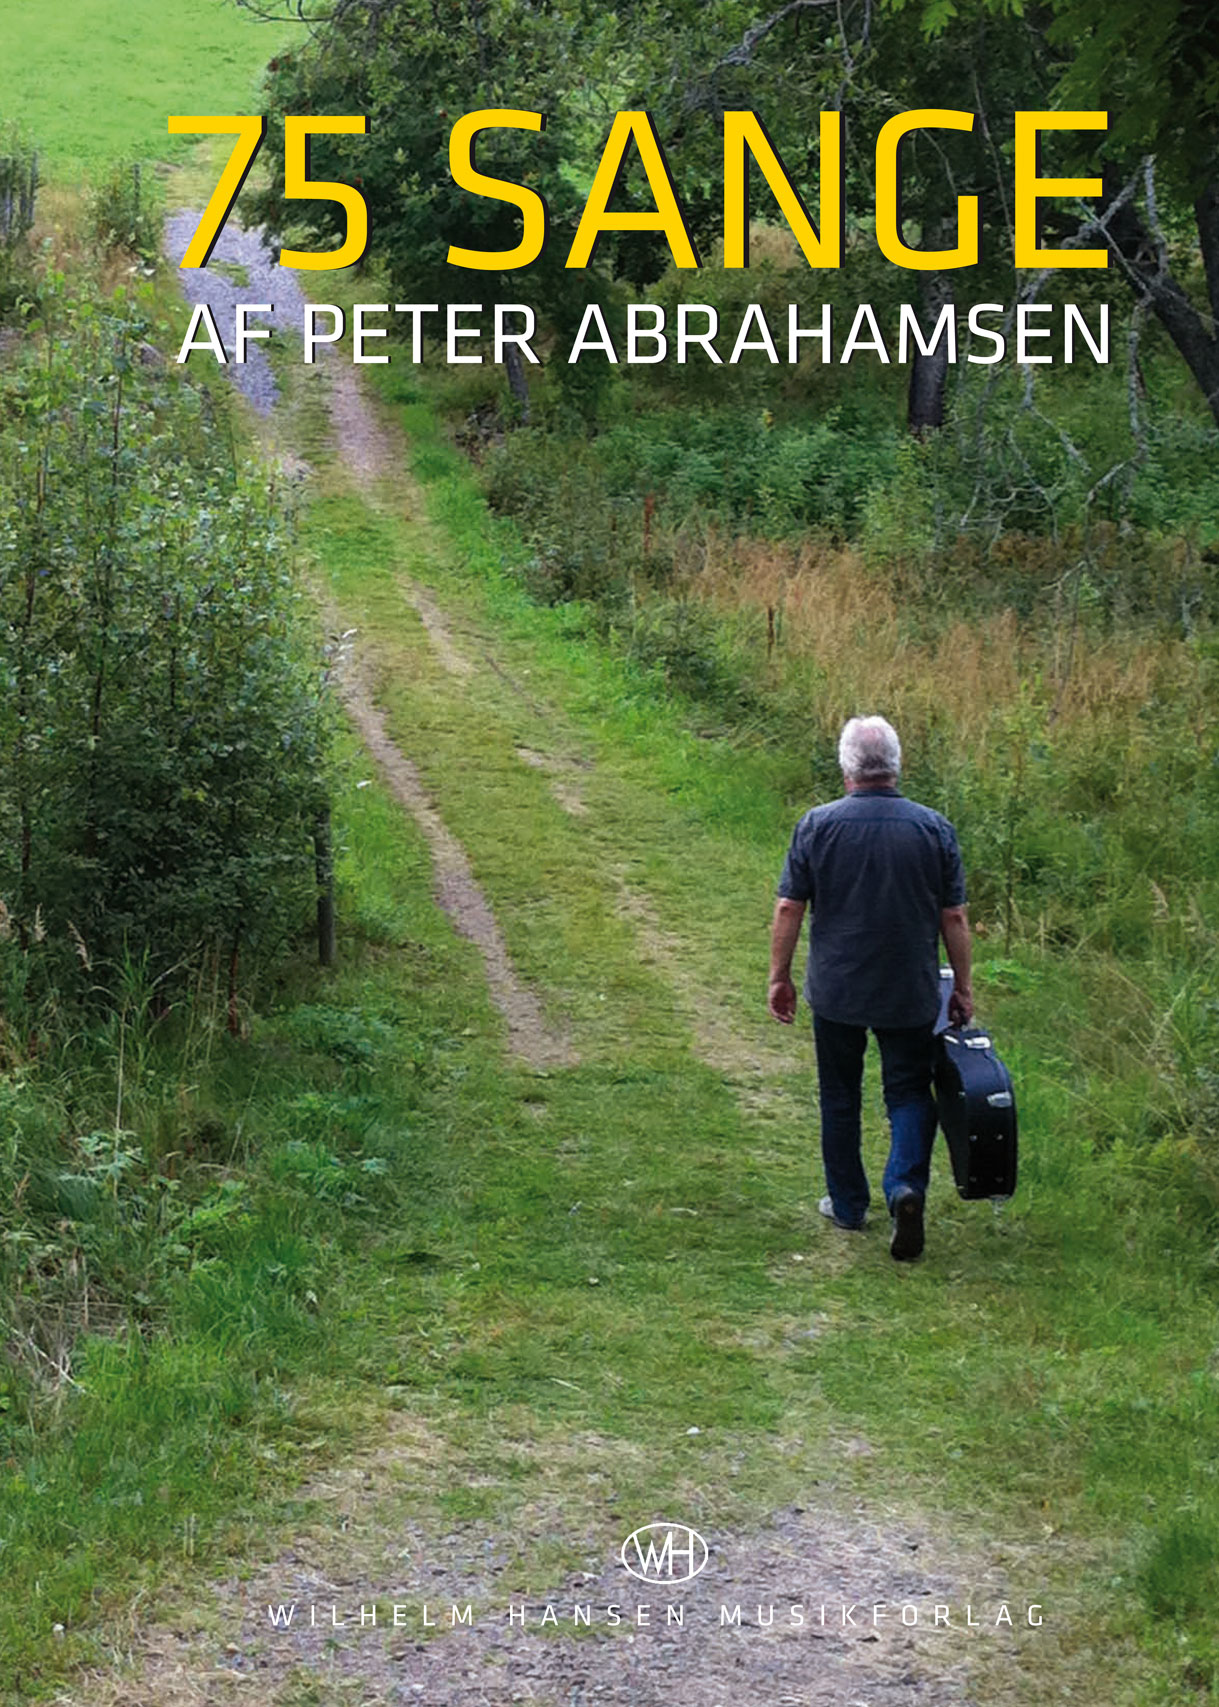 Peter Abrahamsen: 75 Sange af Peter Abrahamsen: Melody  Lyrics & Chords: Artist